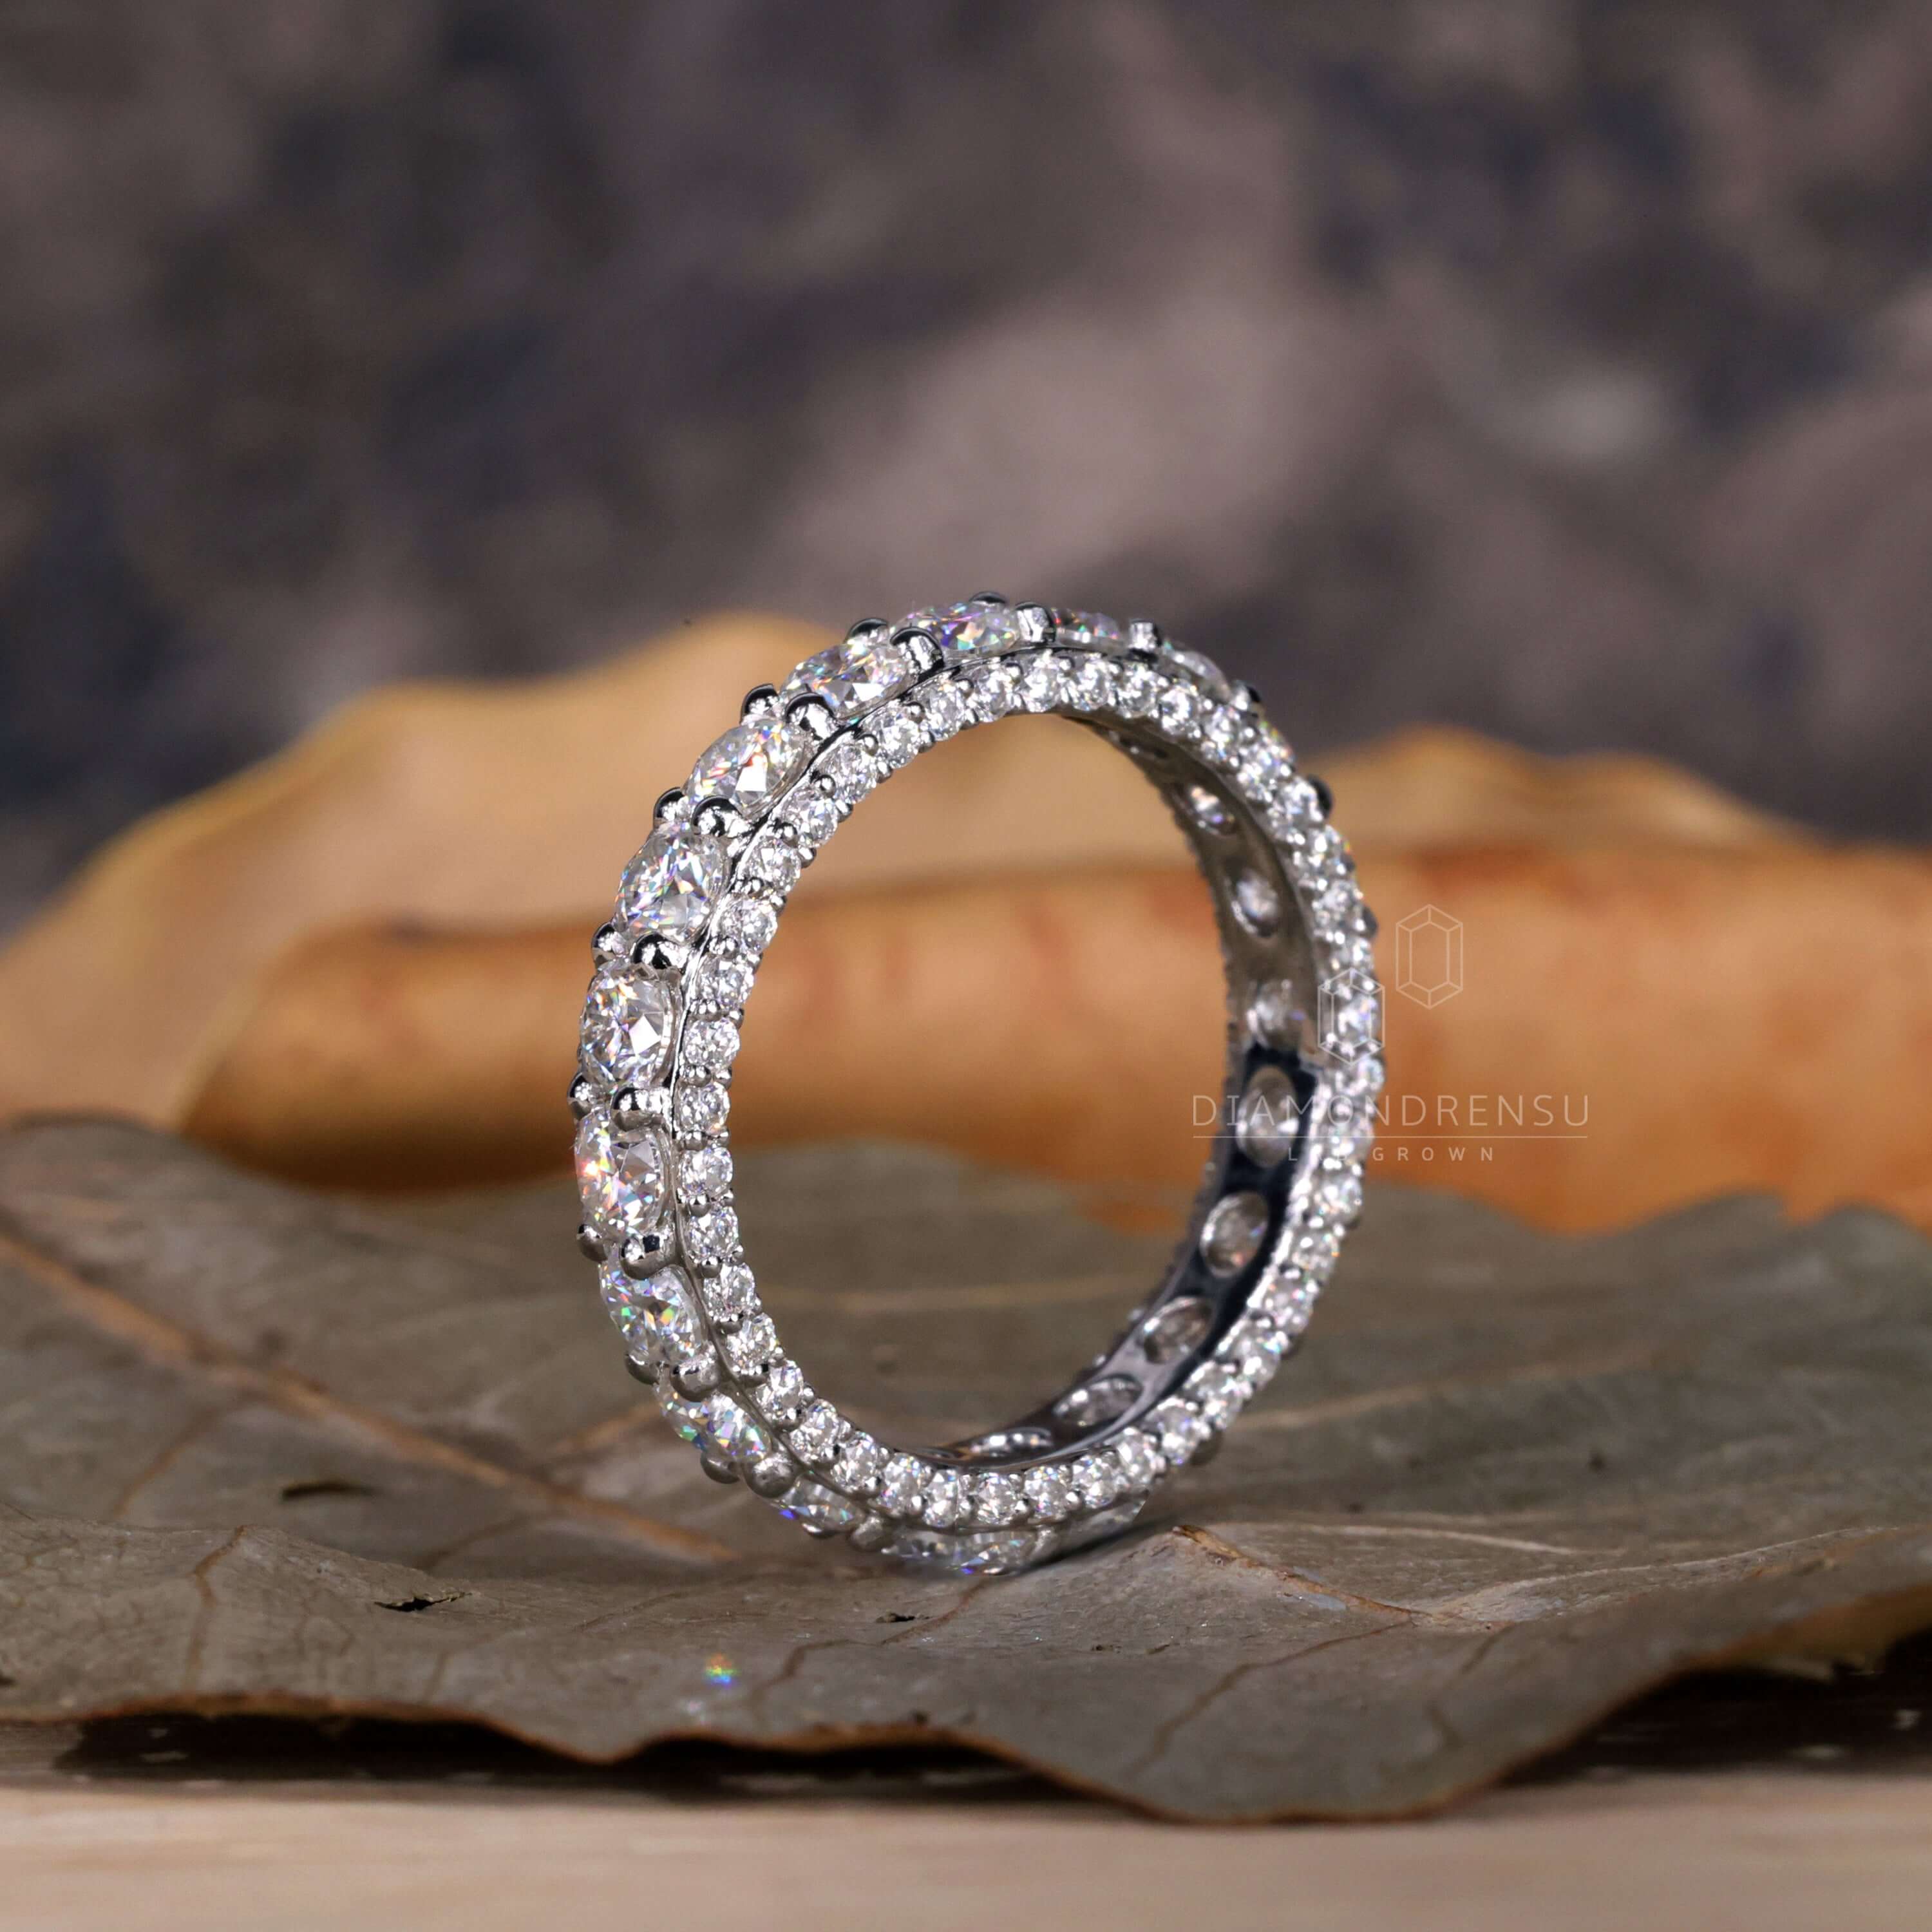 customized ring - diamondrensu 